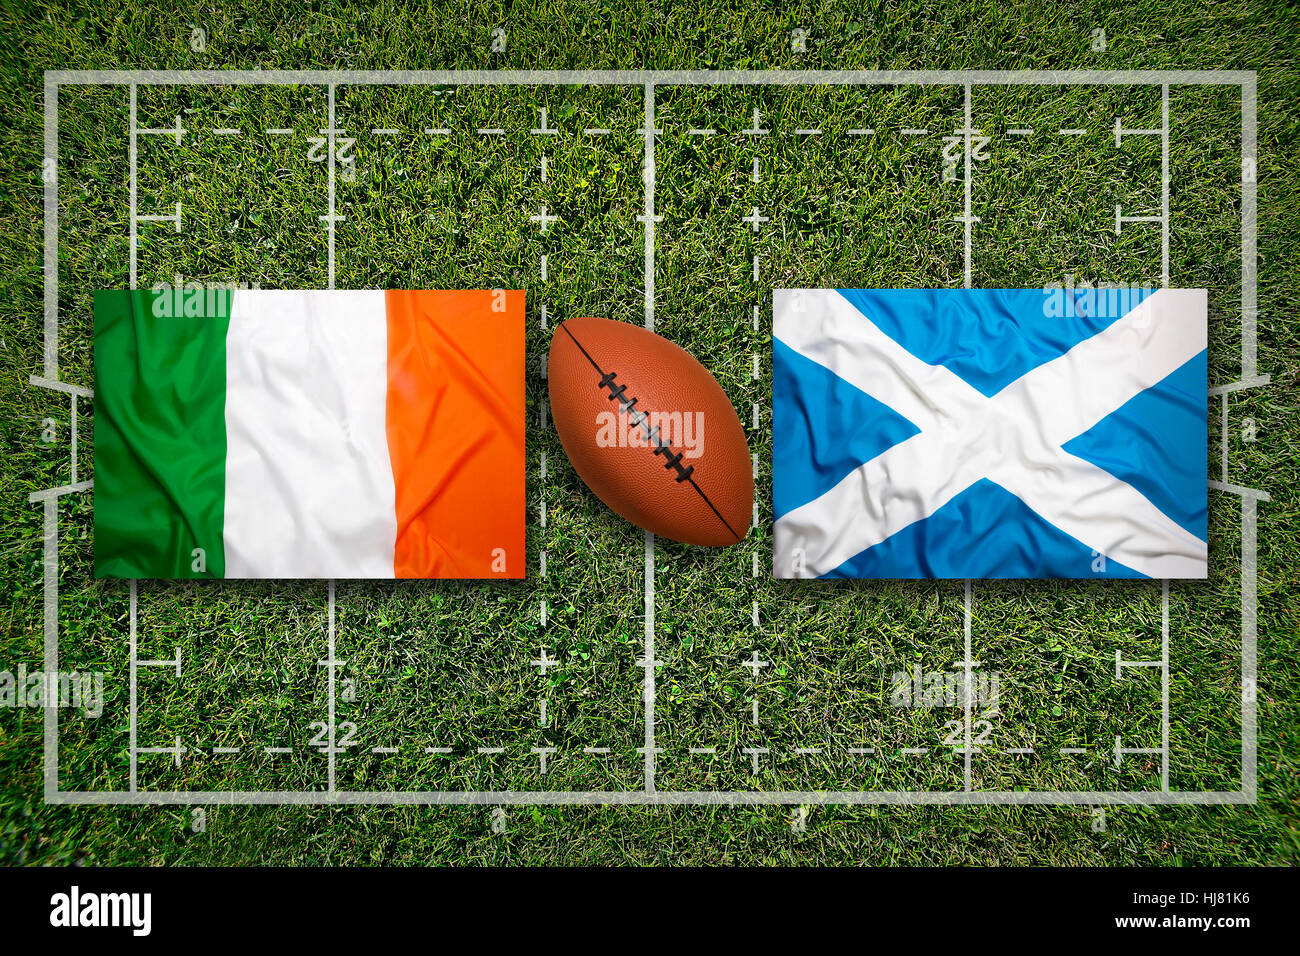 Irlanda vs escocia rugby